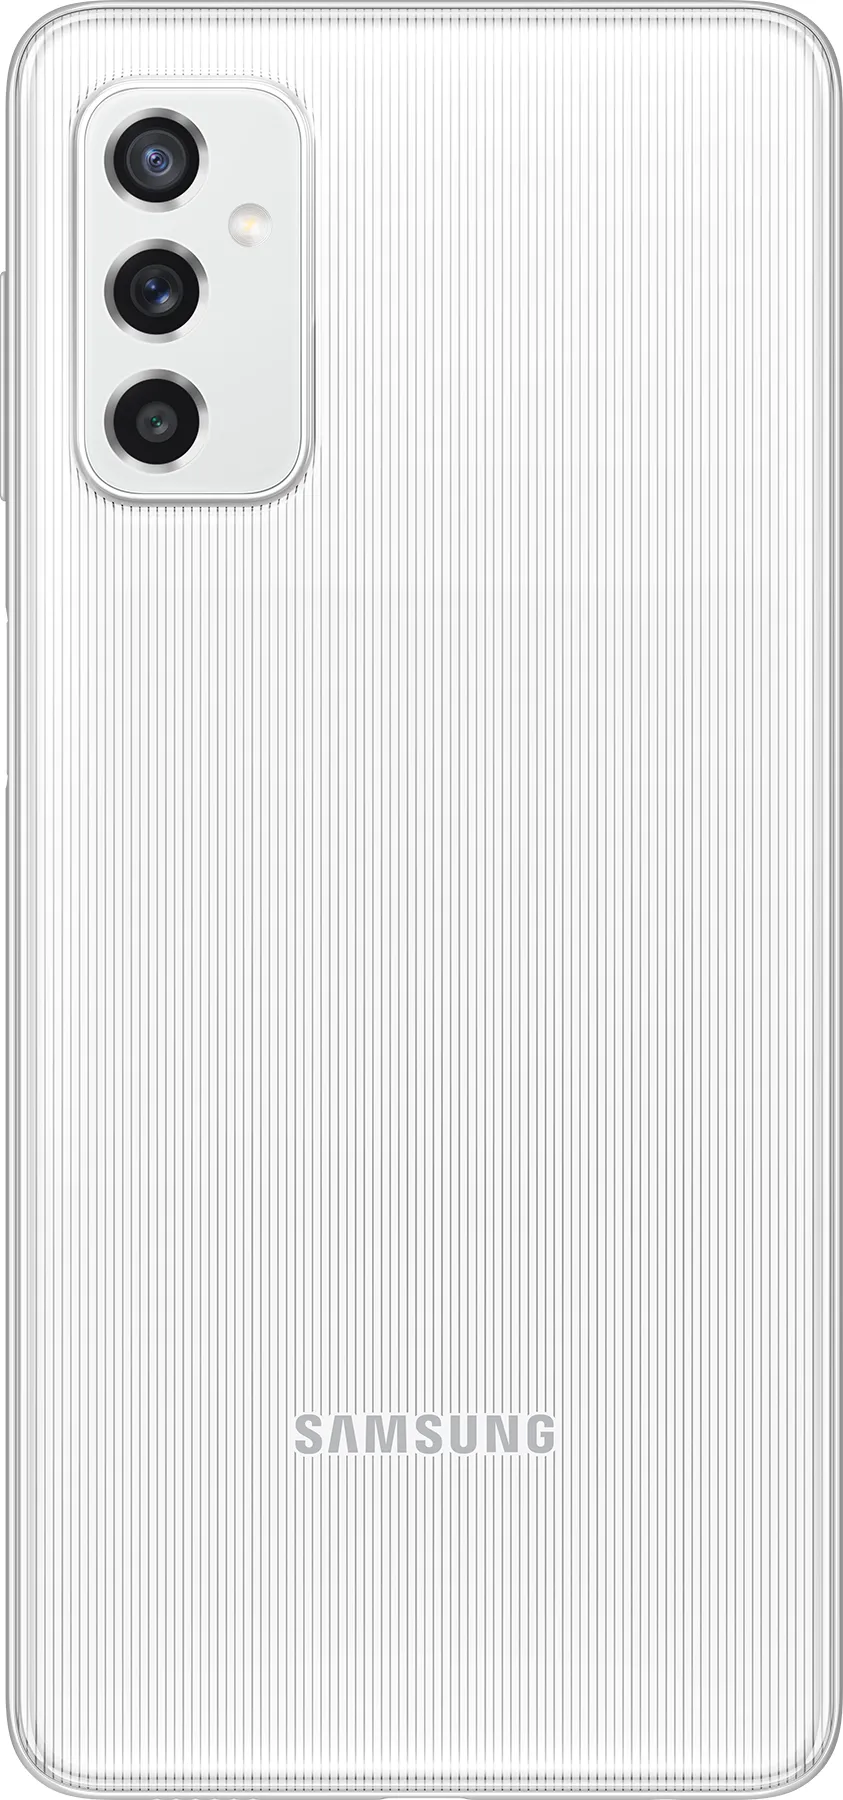 Samsung Galaxy M52 5G 6/128GB